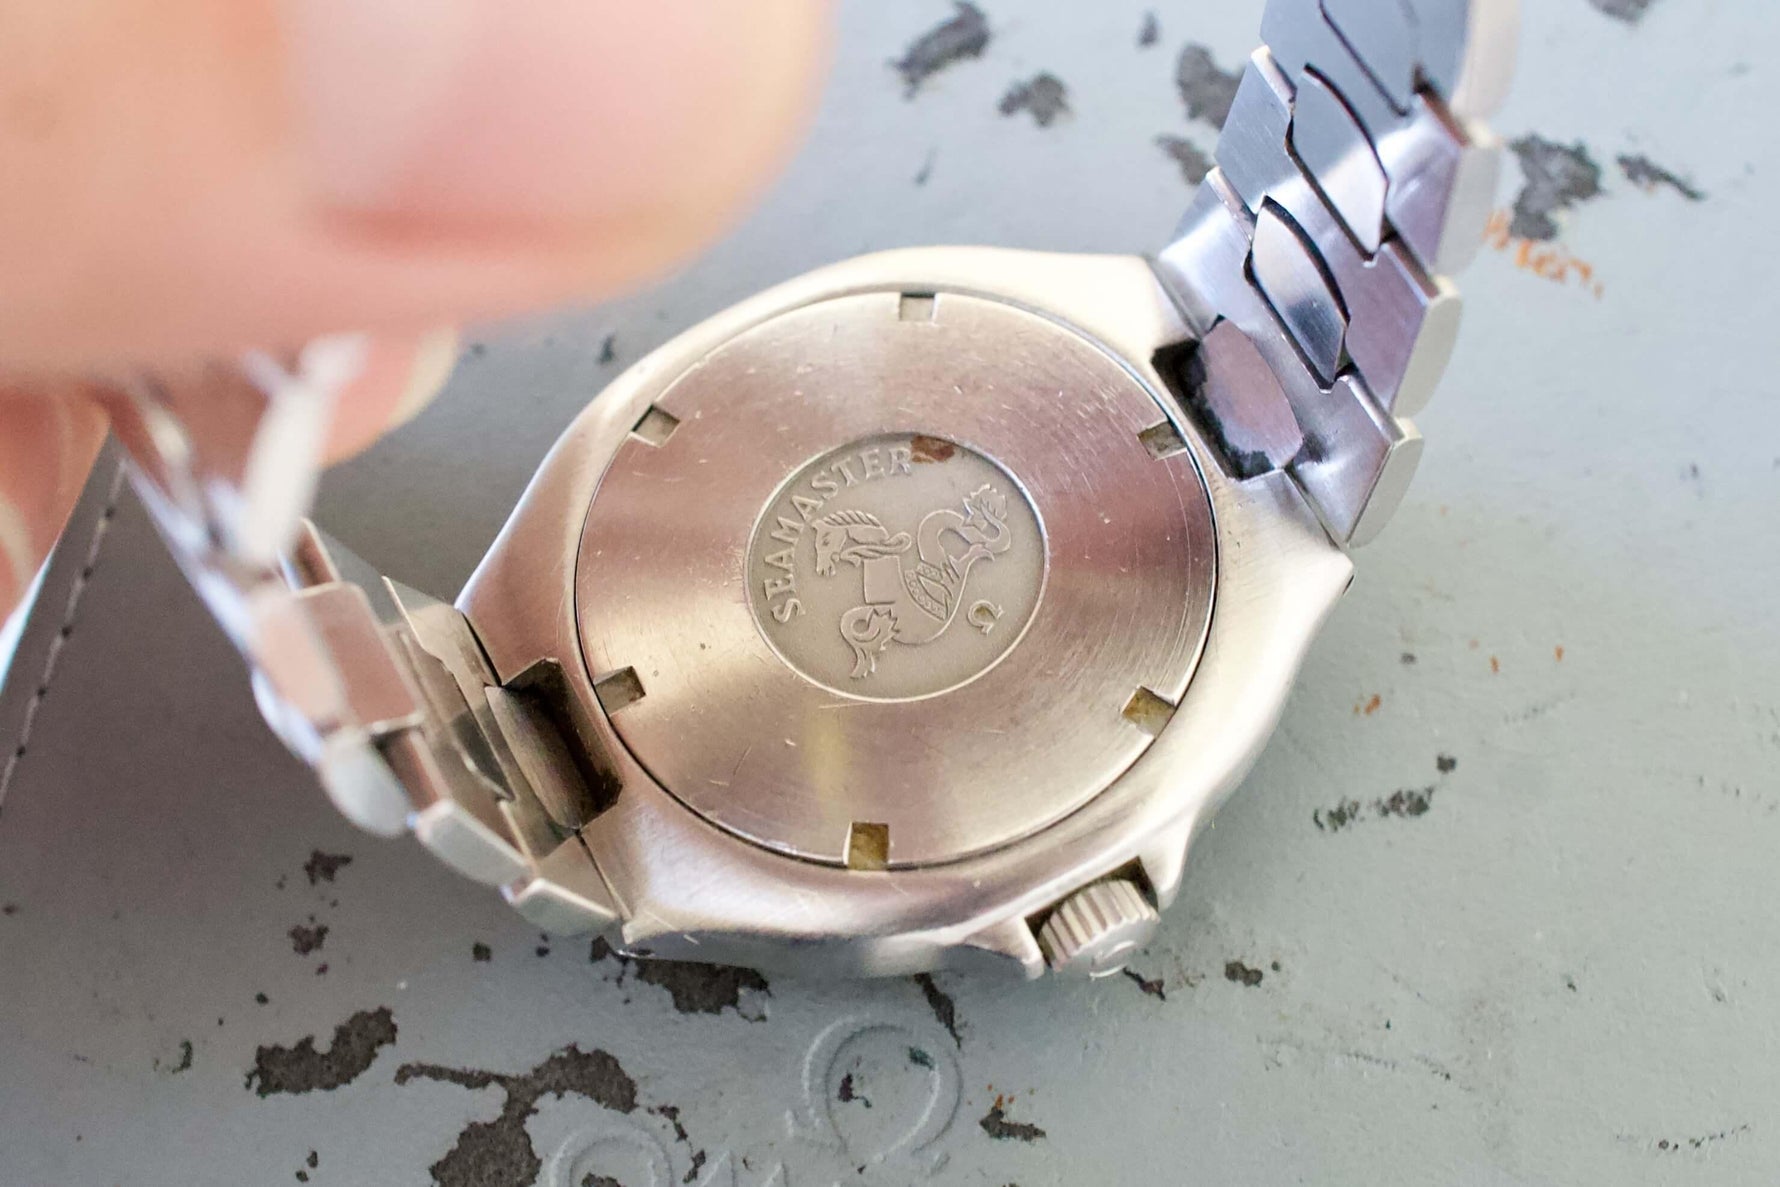 SOLDOUT: Omega Seamaster Pre-Bond 200m 396.1062 Quartz 38mm Mens Watch - WearingTime Luxury Watches